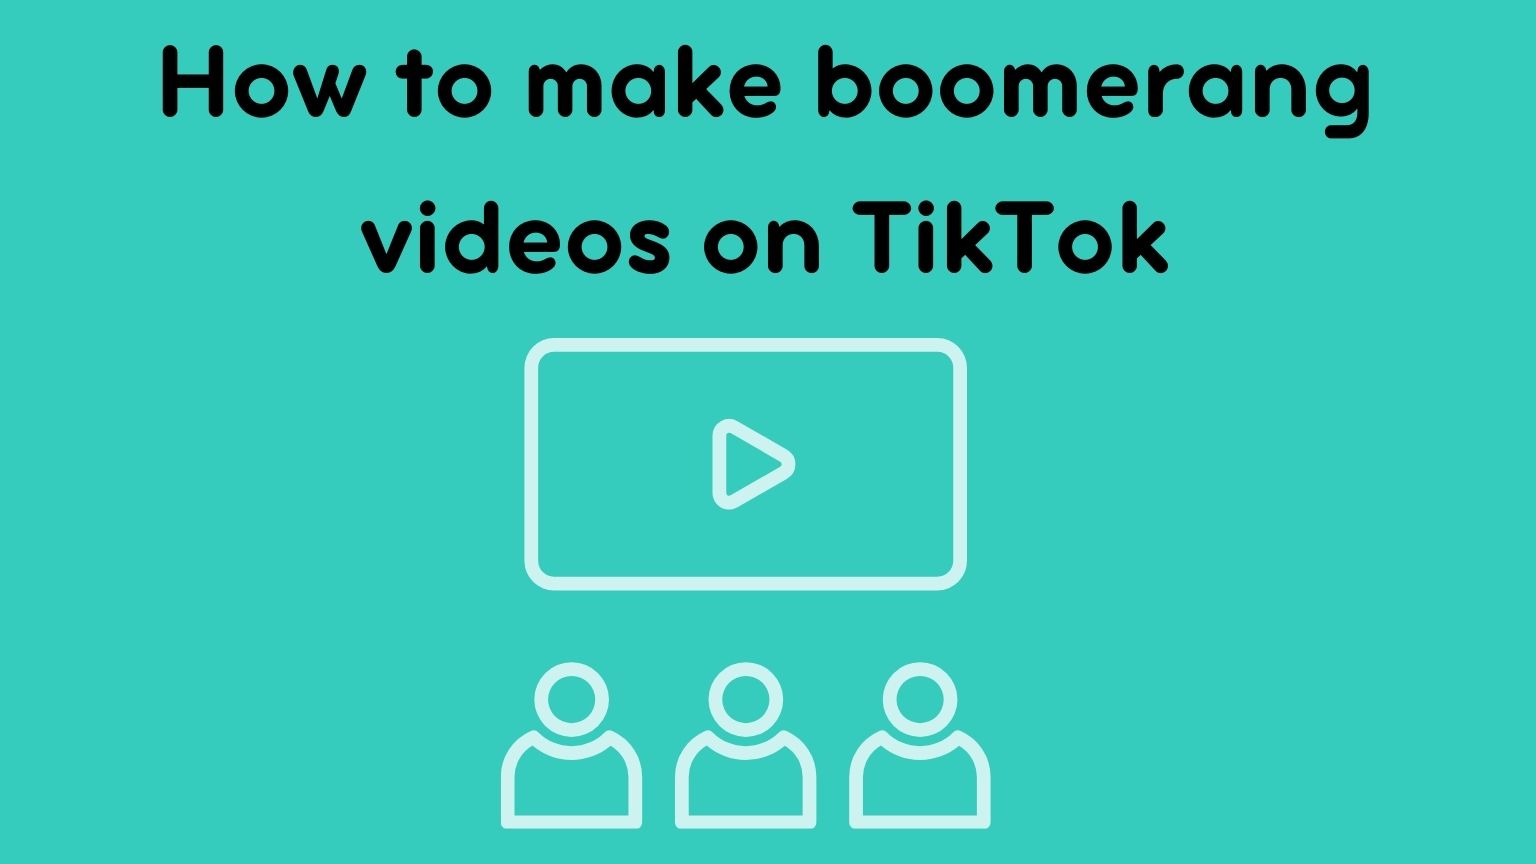 How to make boomerang videos on TikTok